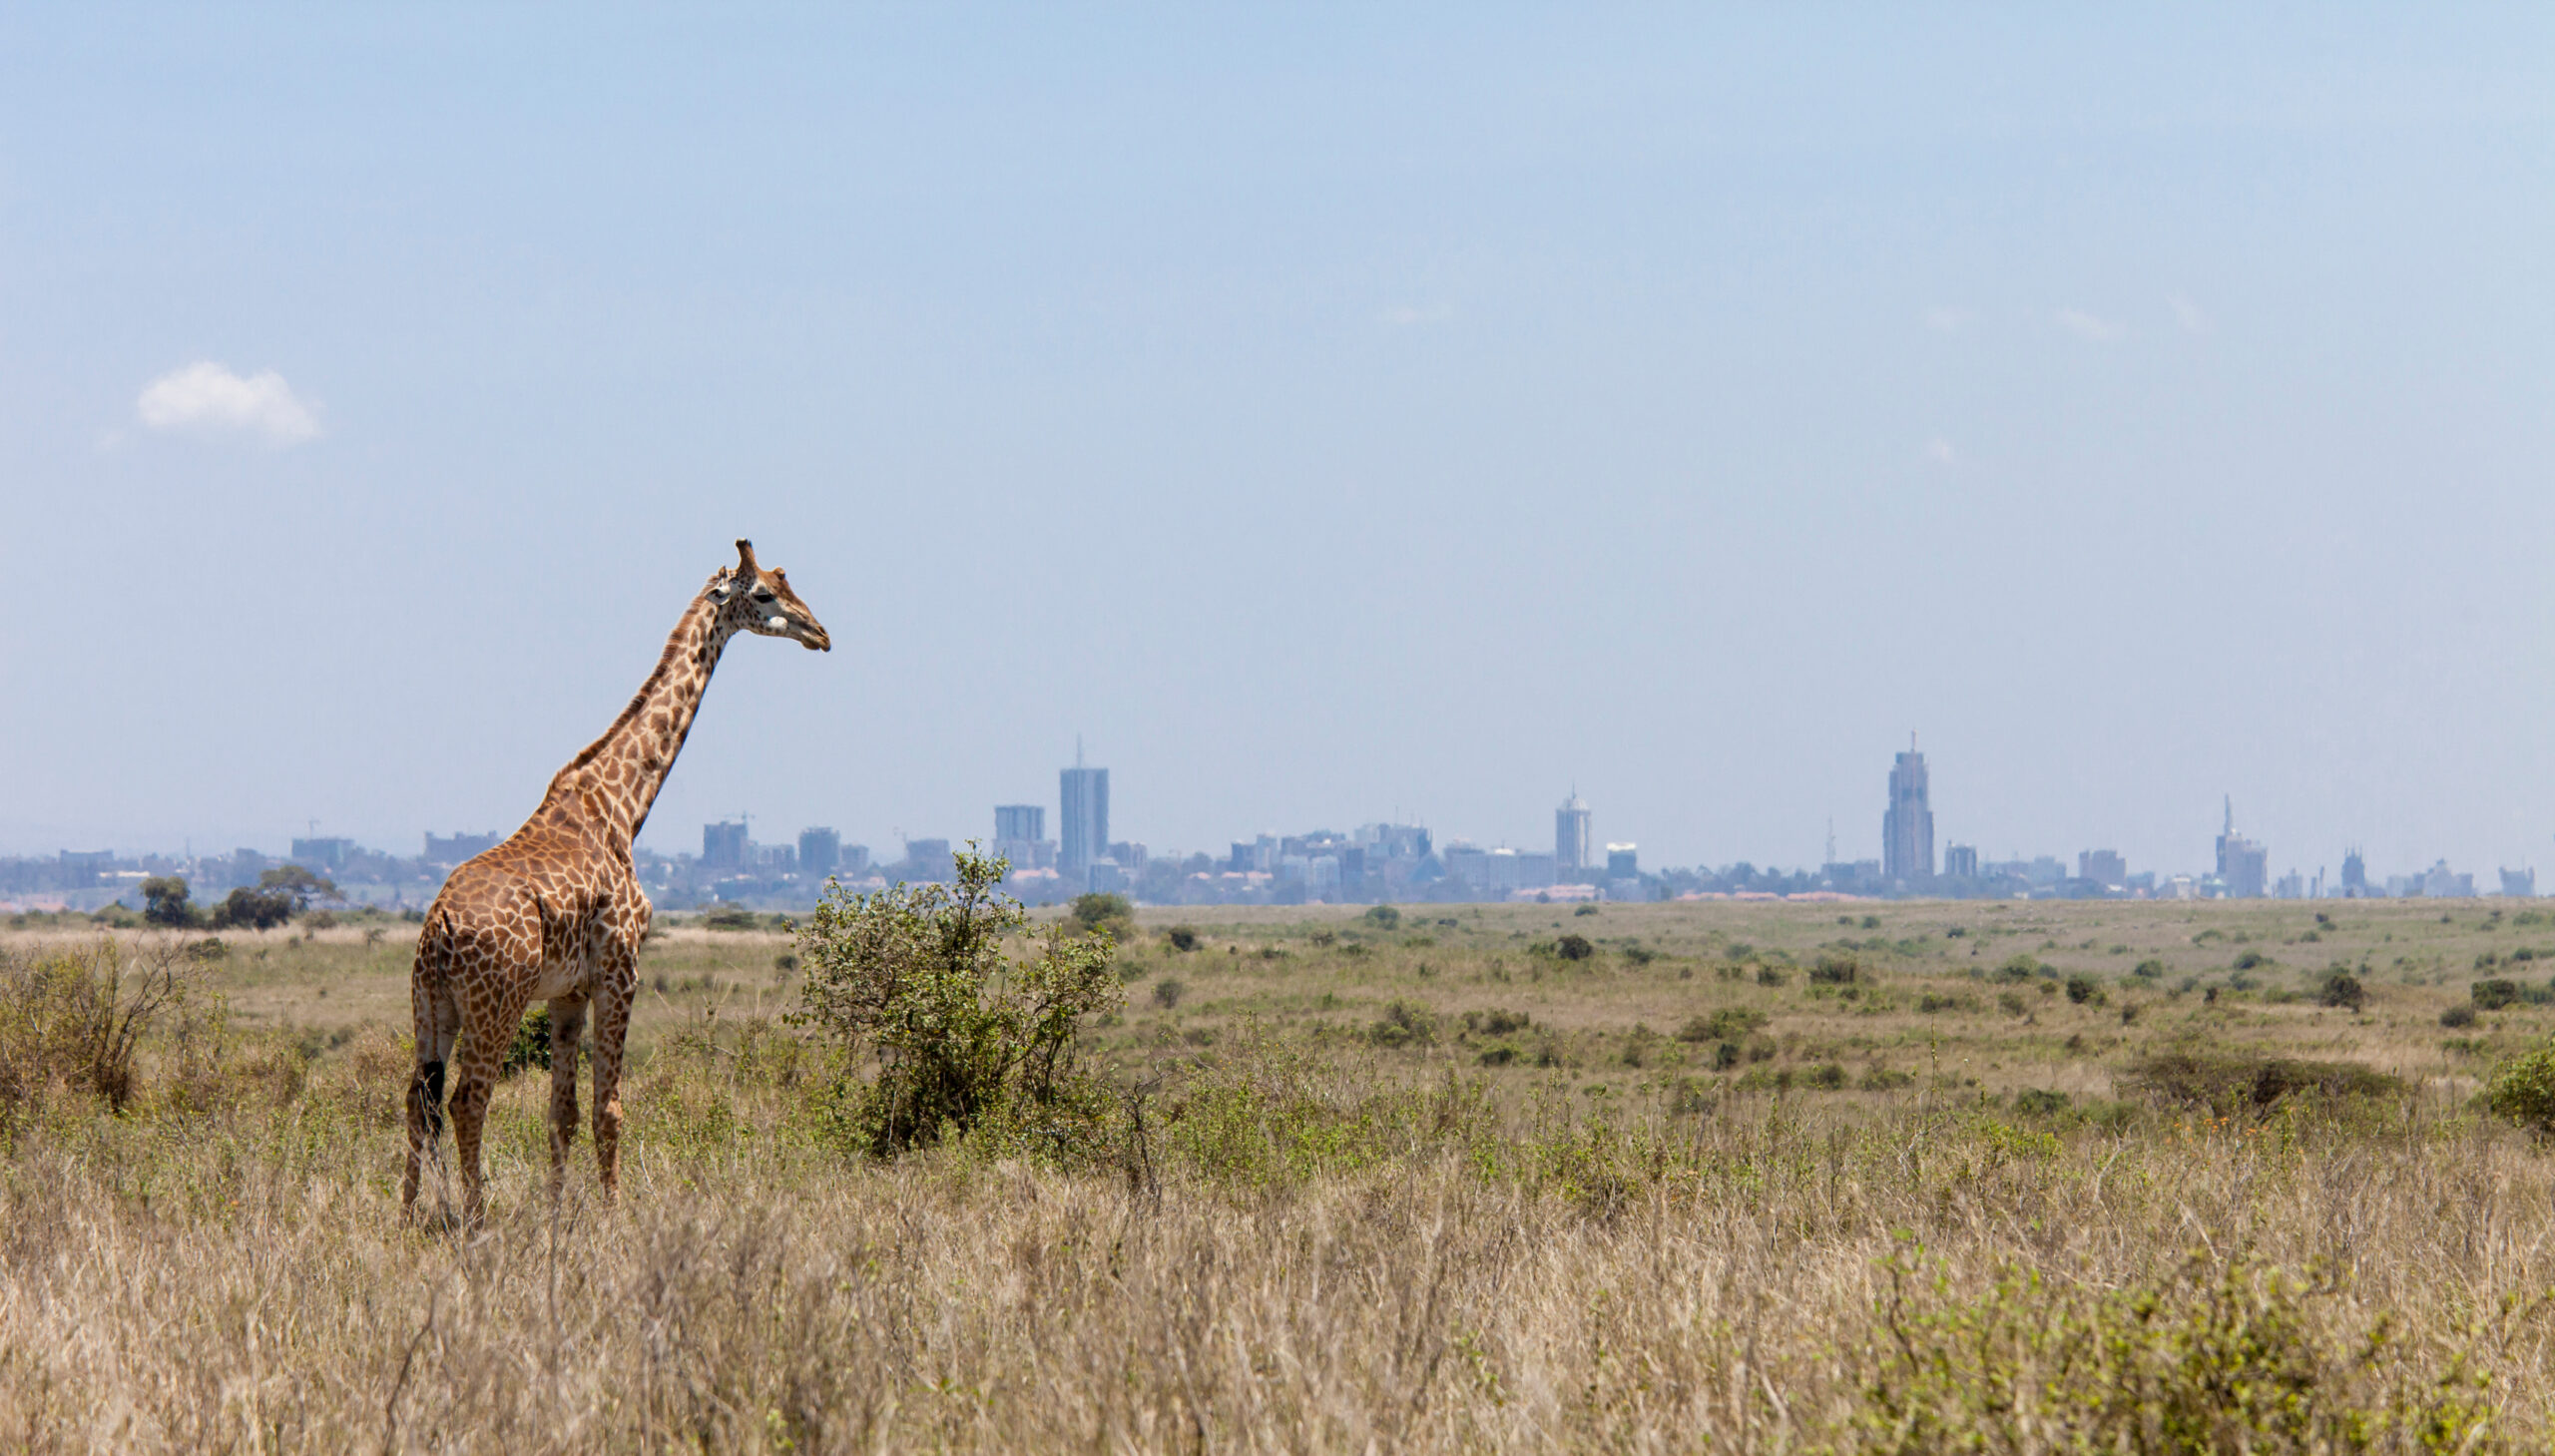 giraffe in open area with city skyline in background